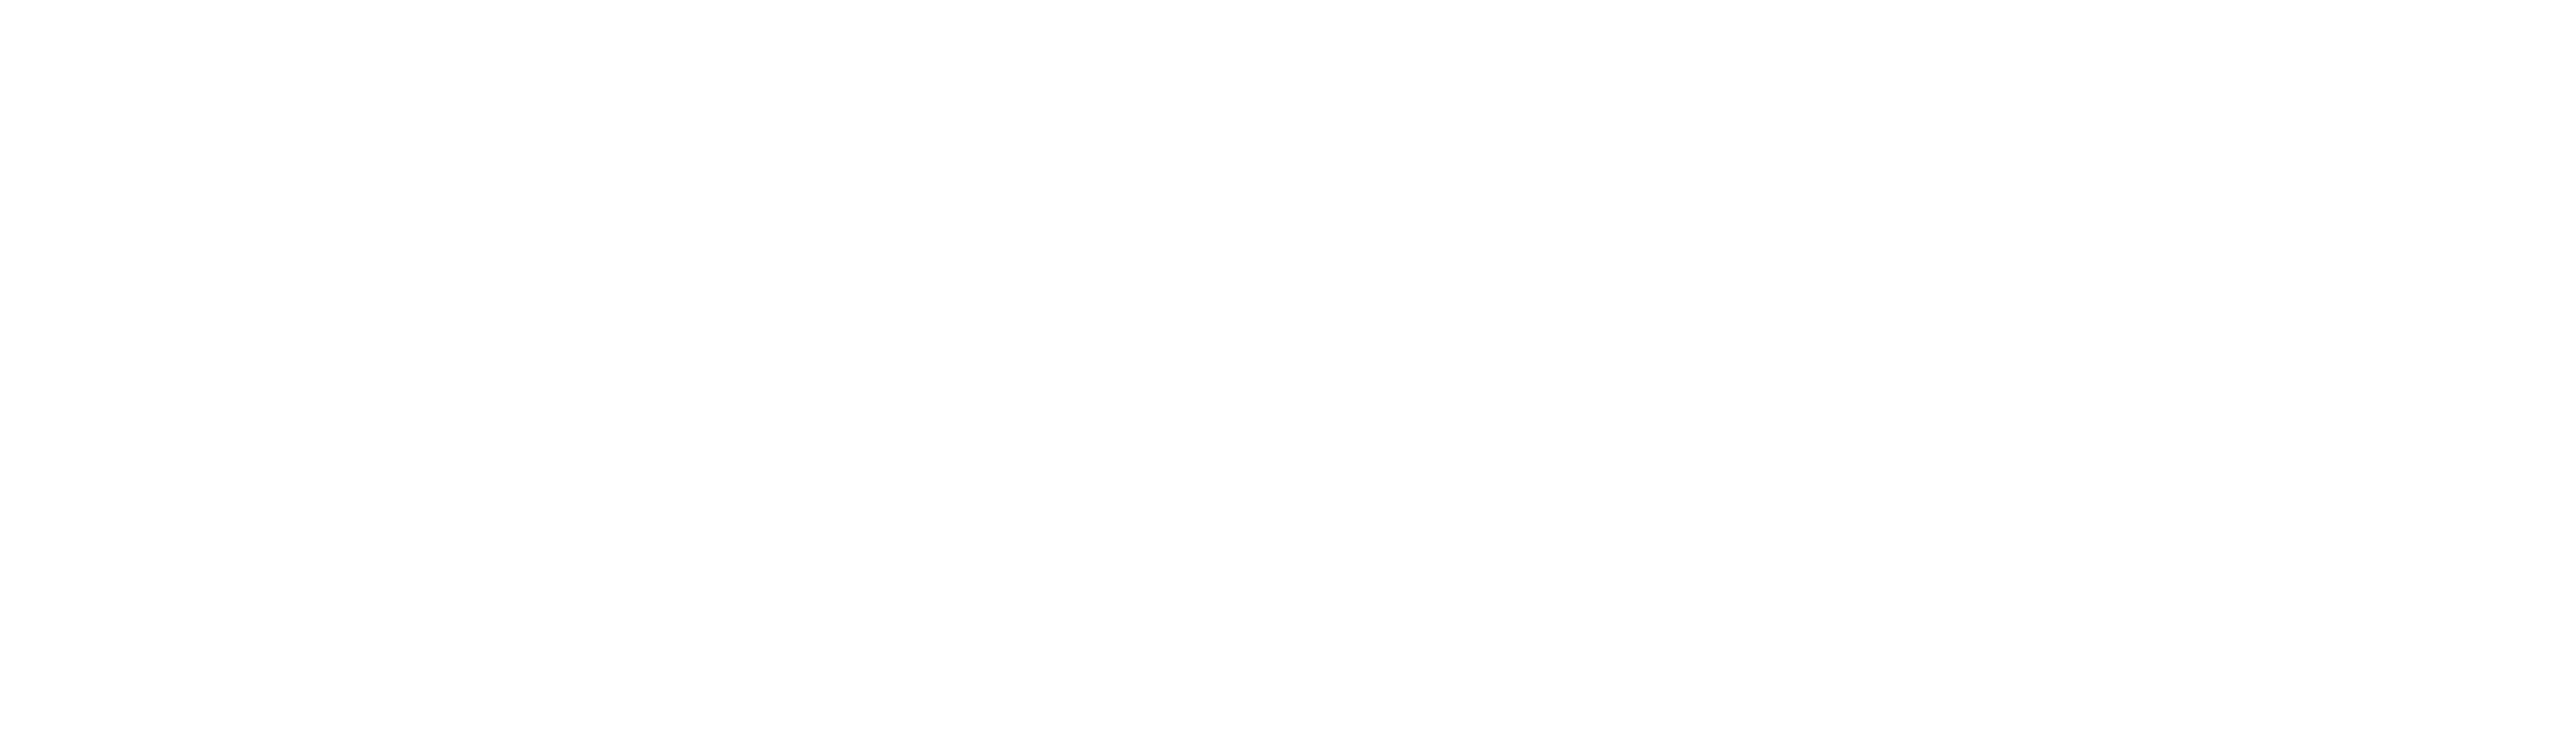 Clip Joint Education Logo